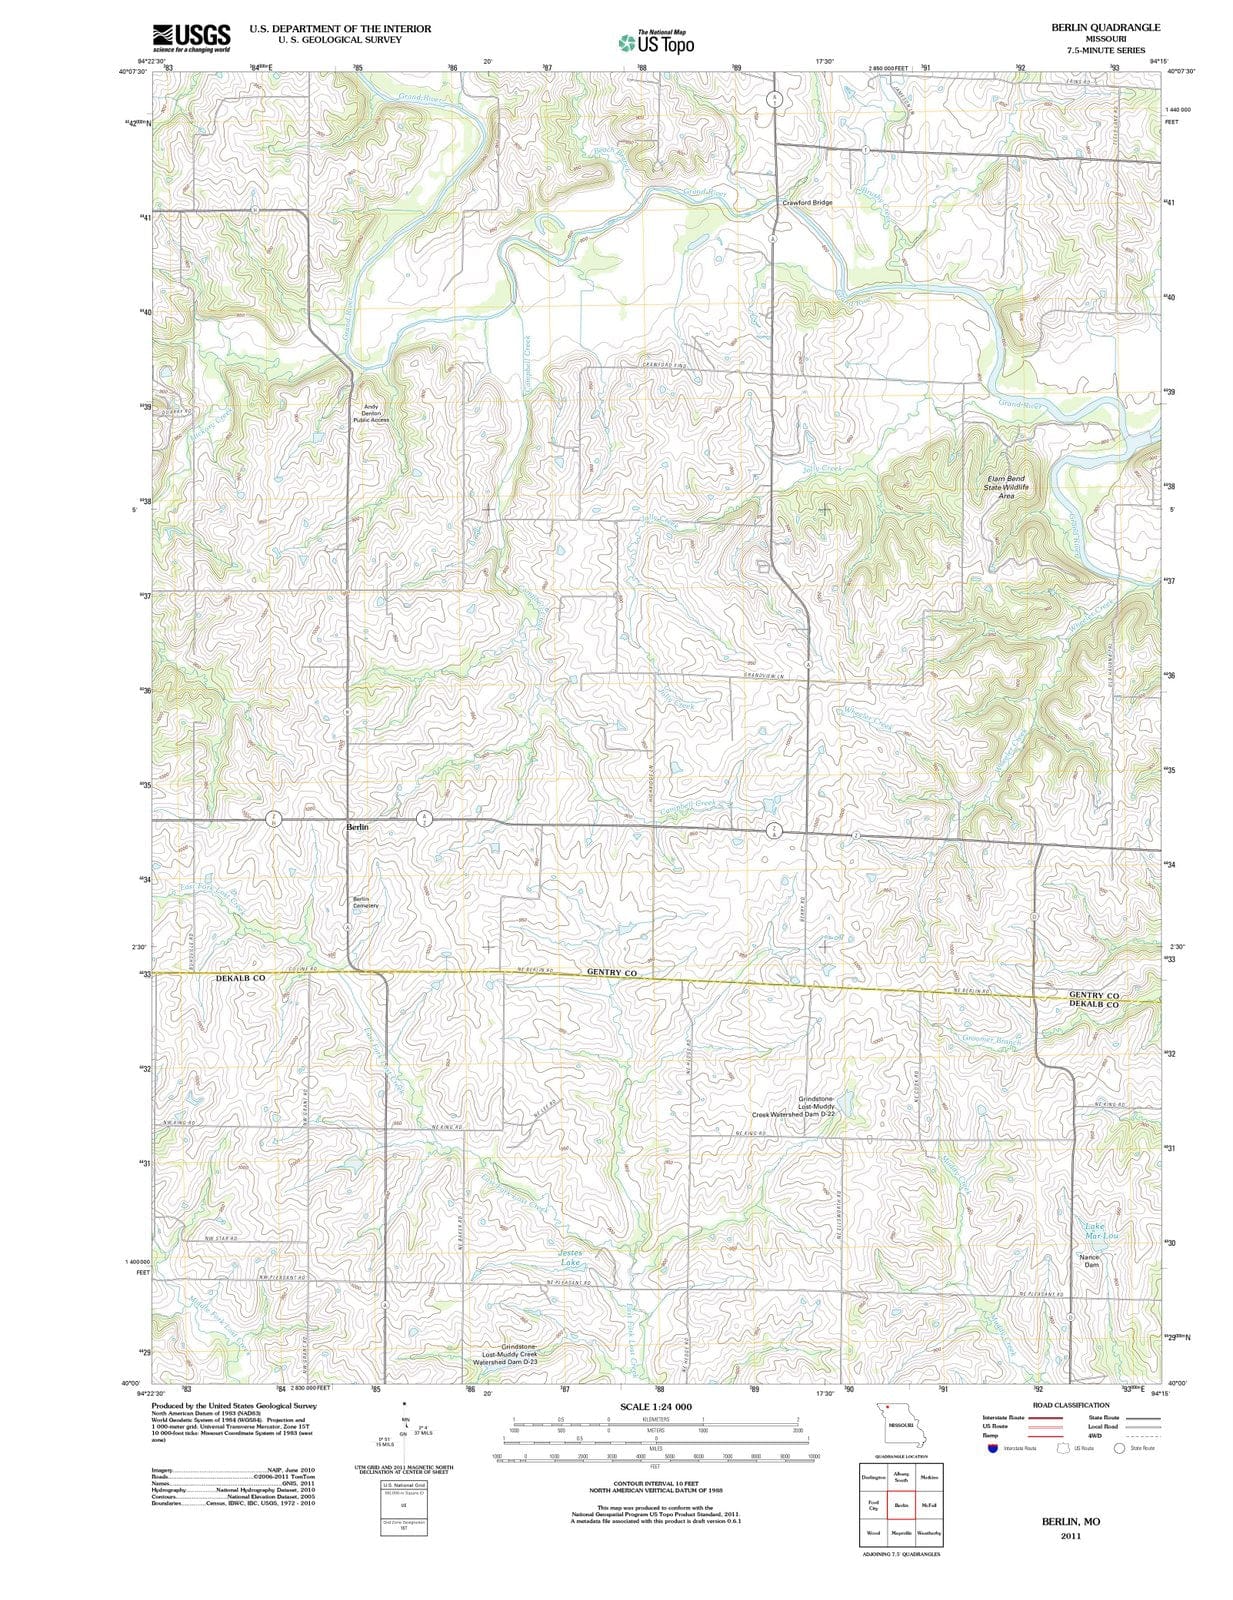 2011 Berlin, MO - Missouri - USGS Topographic Map